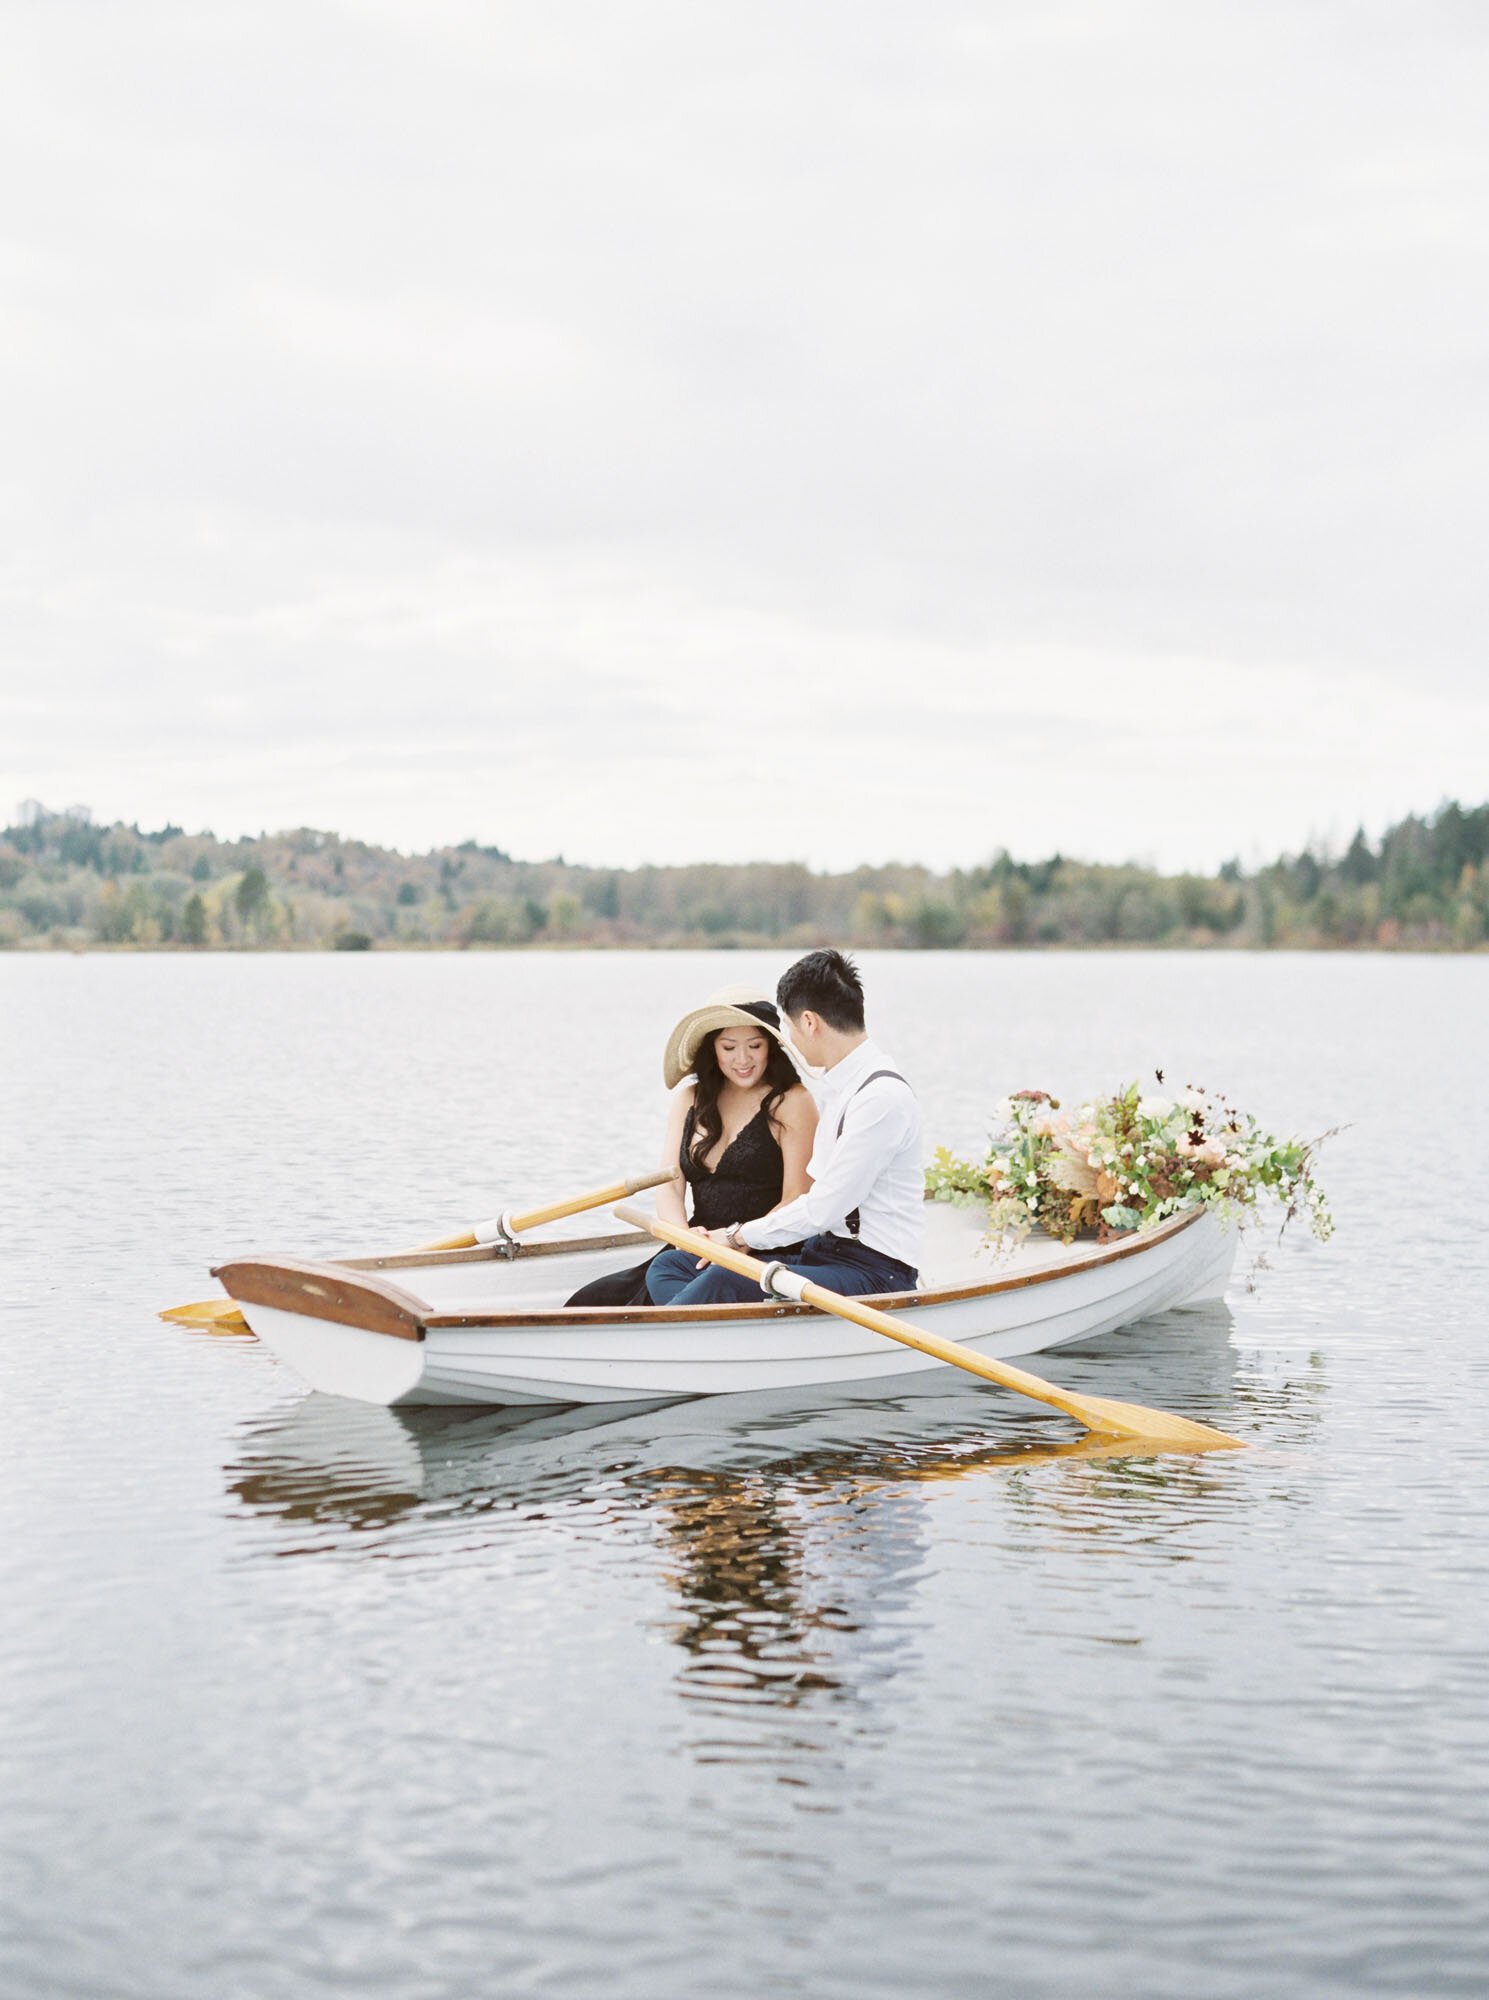 DeerLake+Boat+Engagement+Saminphotography+44.jpg